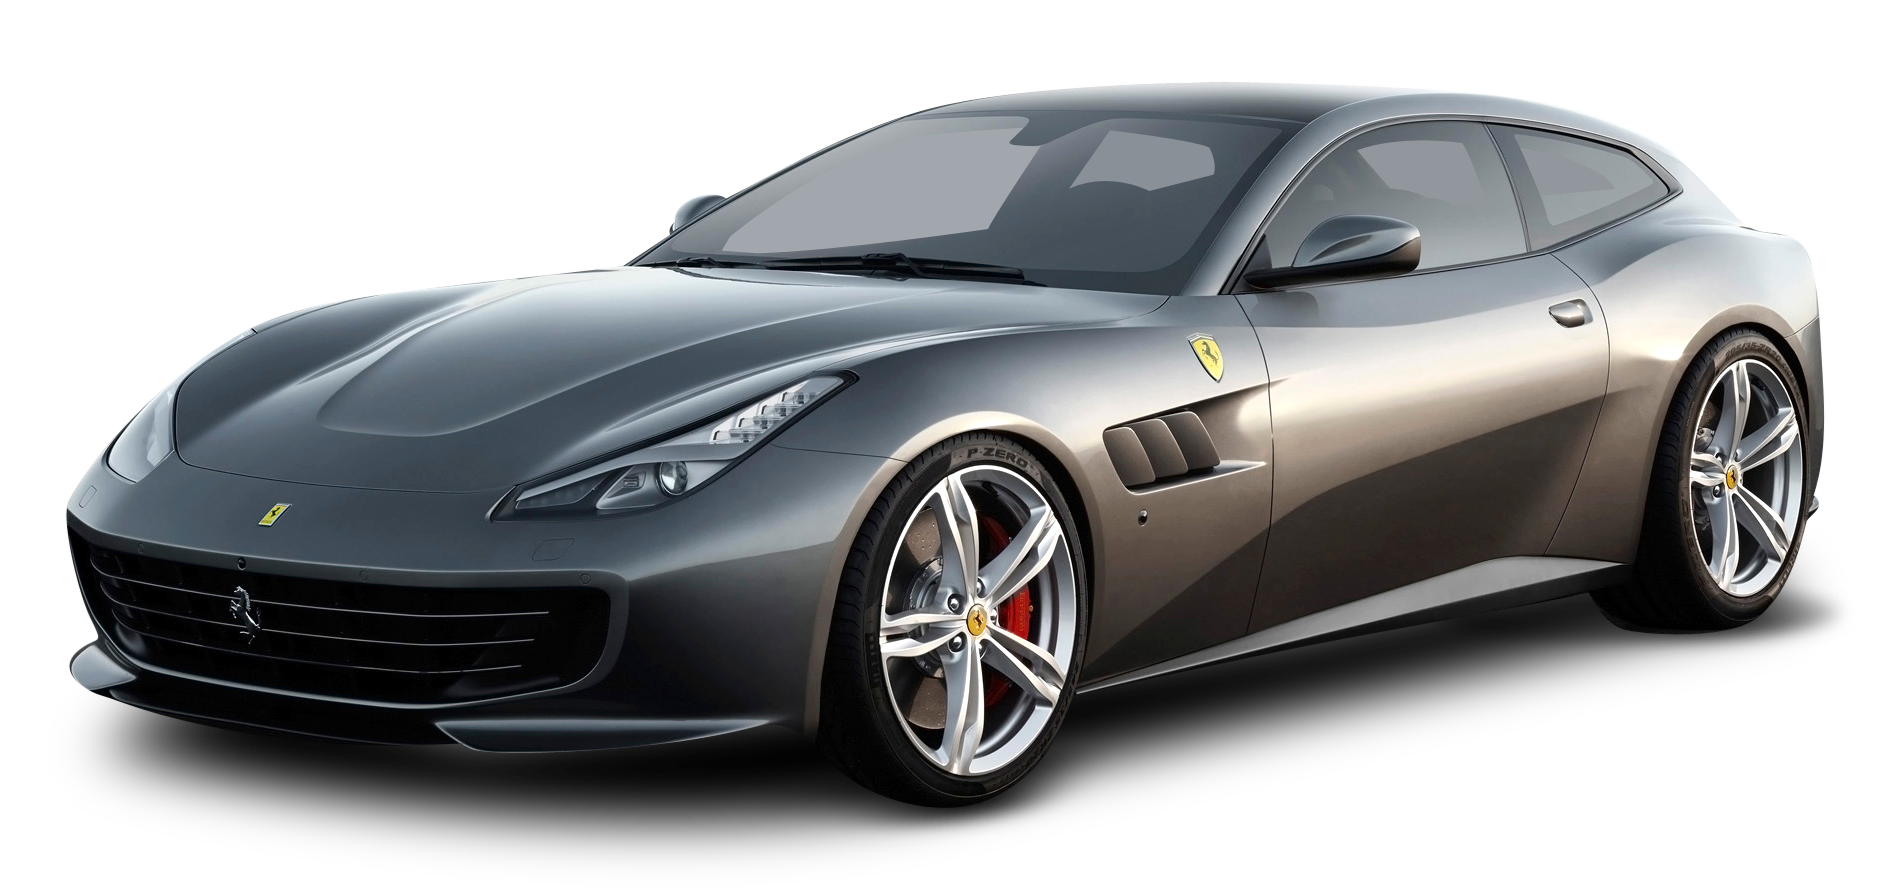 Grey Ferrari Gtc4 Lusso Car Png Image - Ferrari, Transparent background PNG HD thumbnail